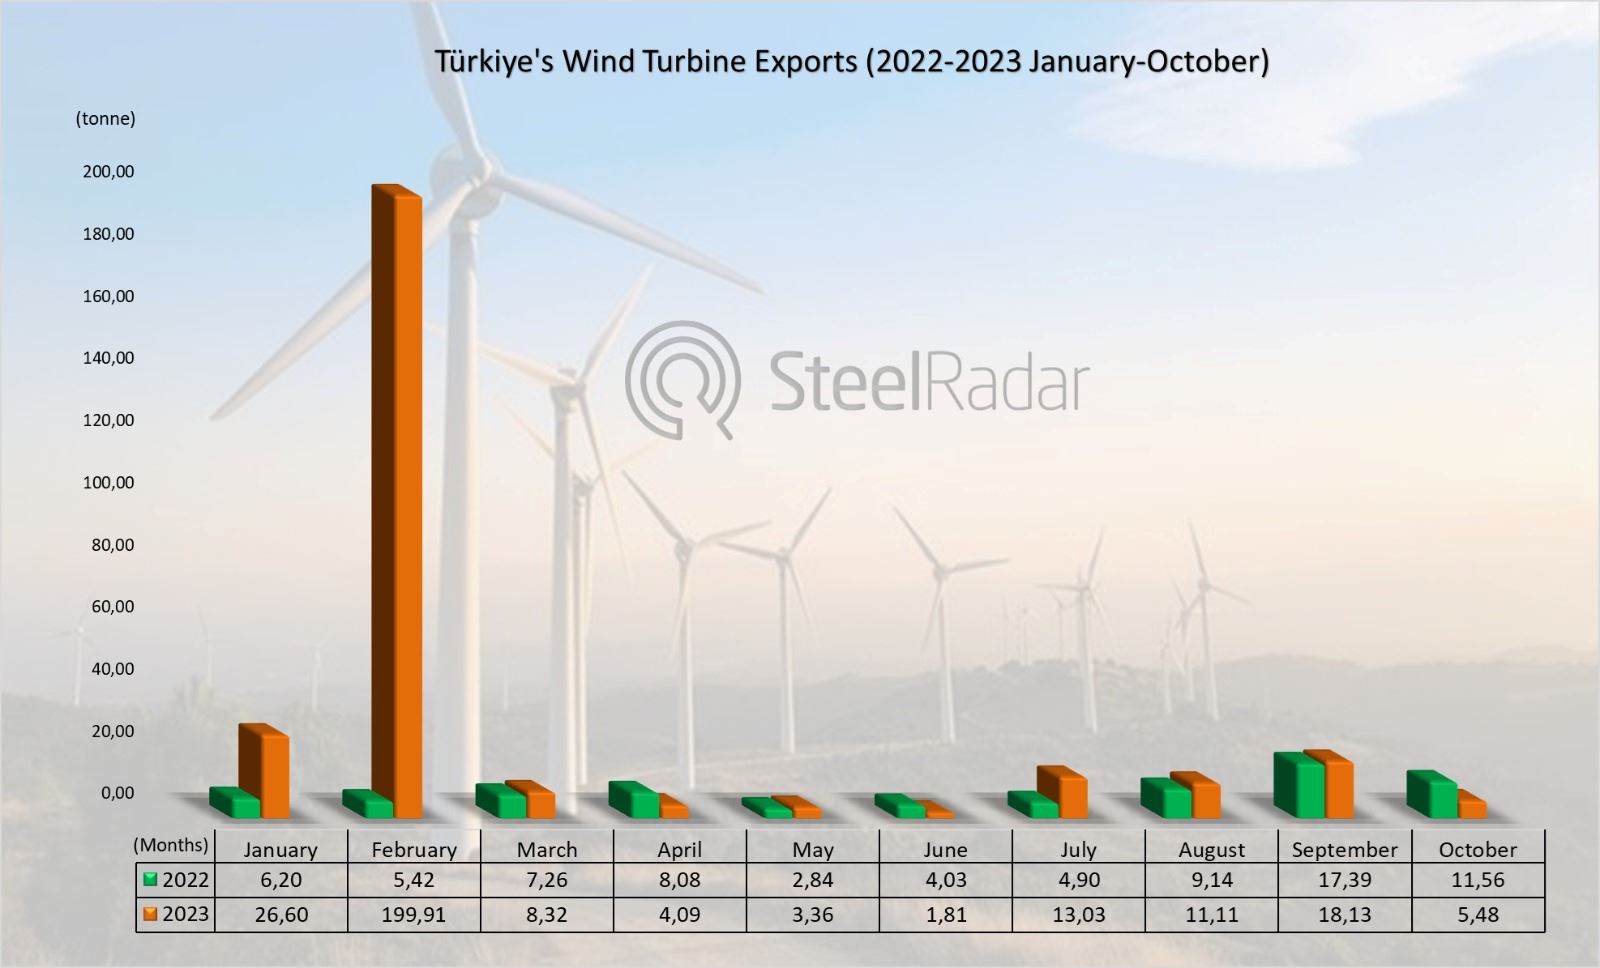 While Türkiye's wind turbine exports decreased in October, imports increased